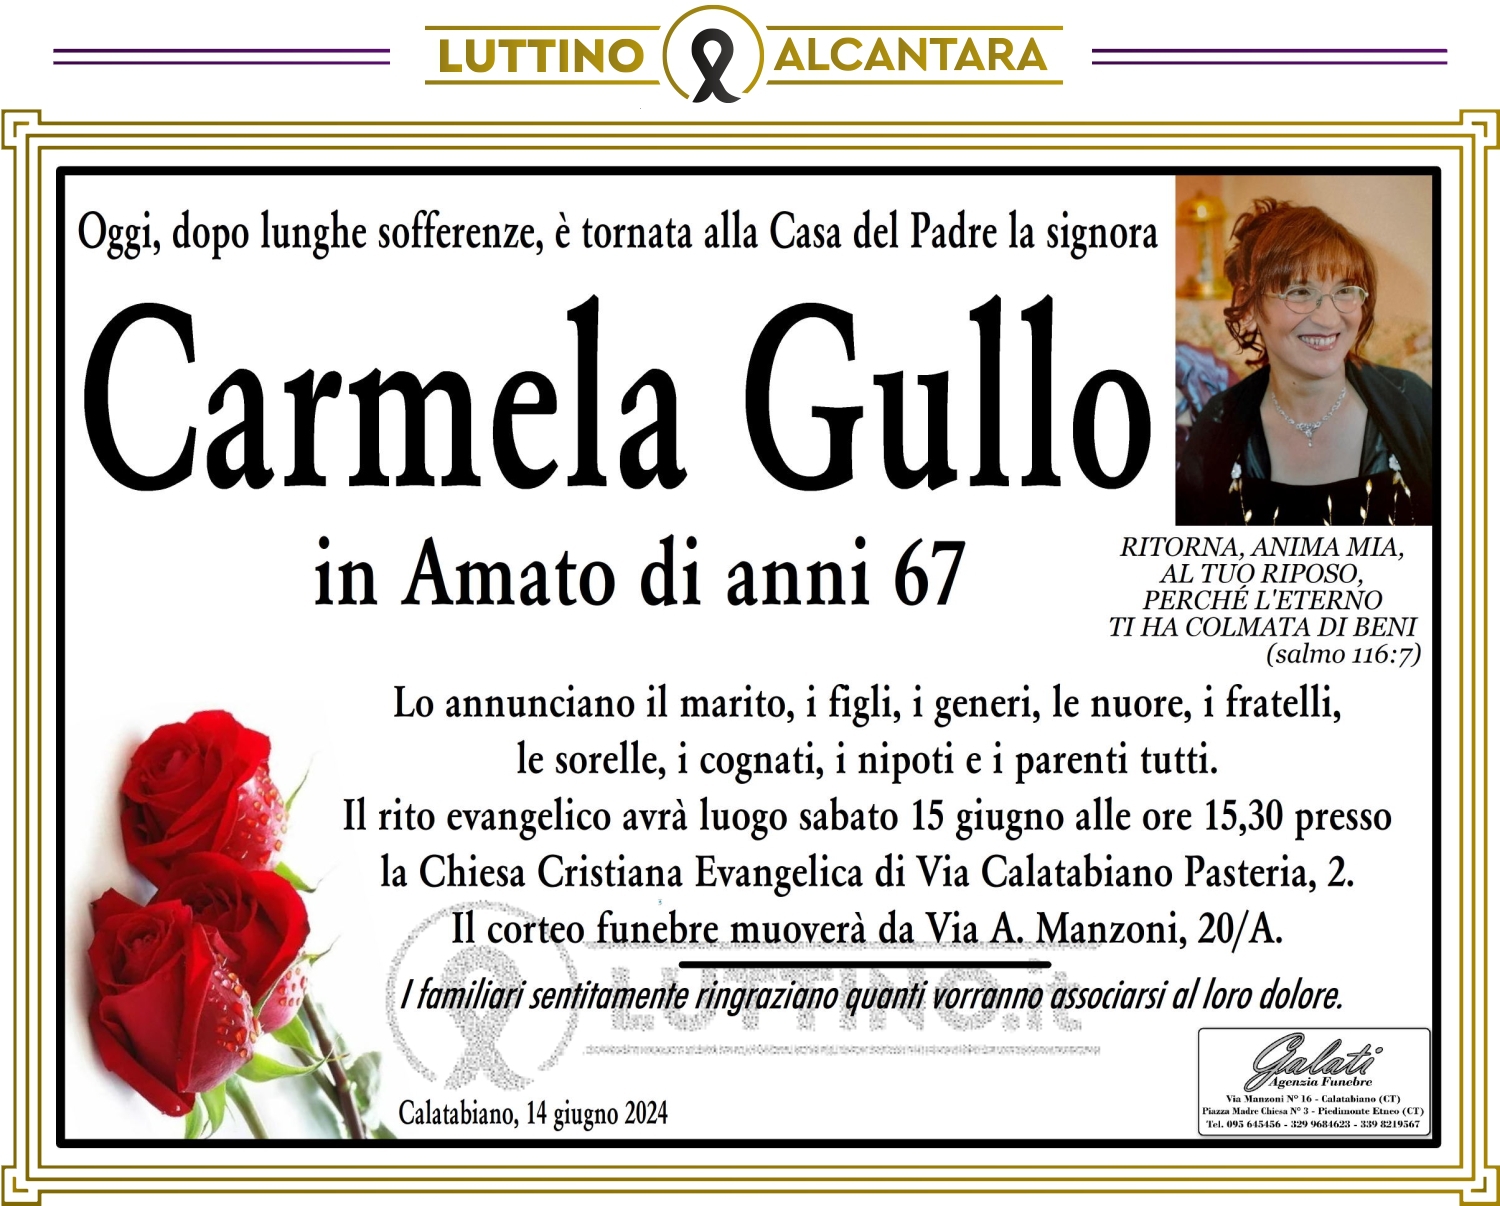 Carmela Gullo